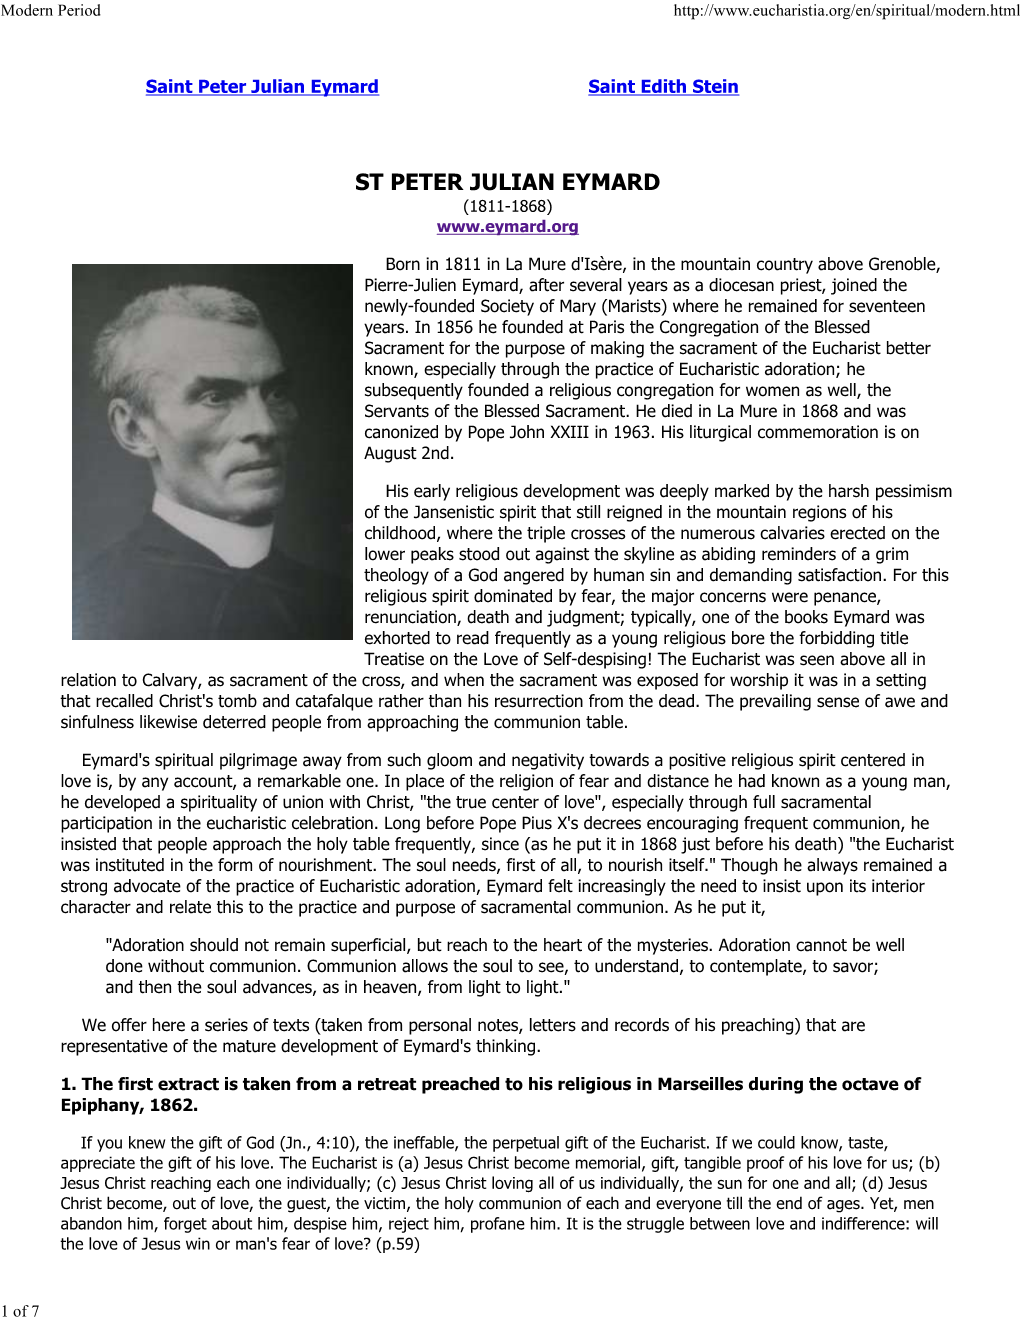 St Peter Julian Eymard (1811-1868)